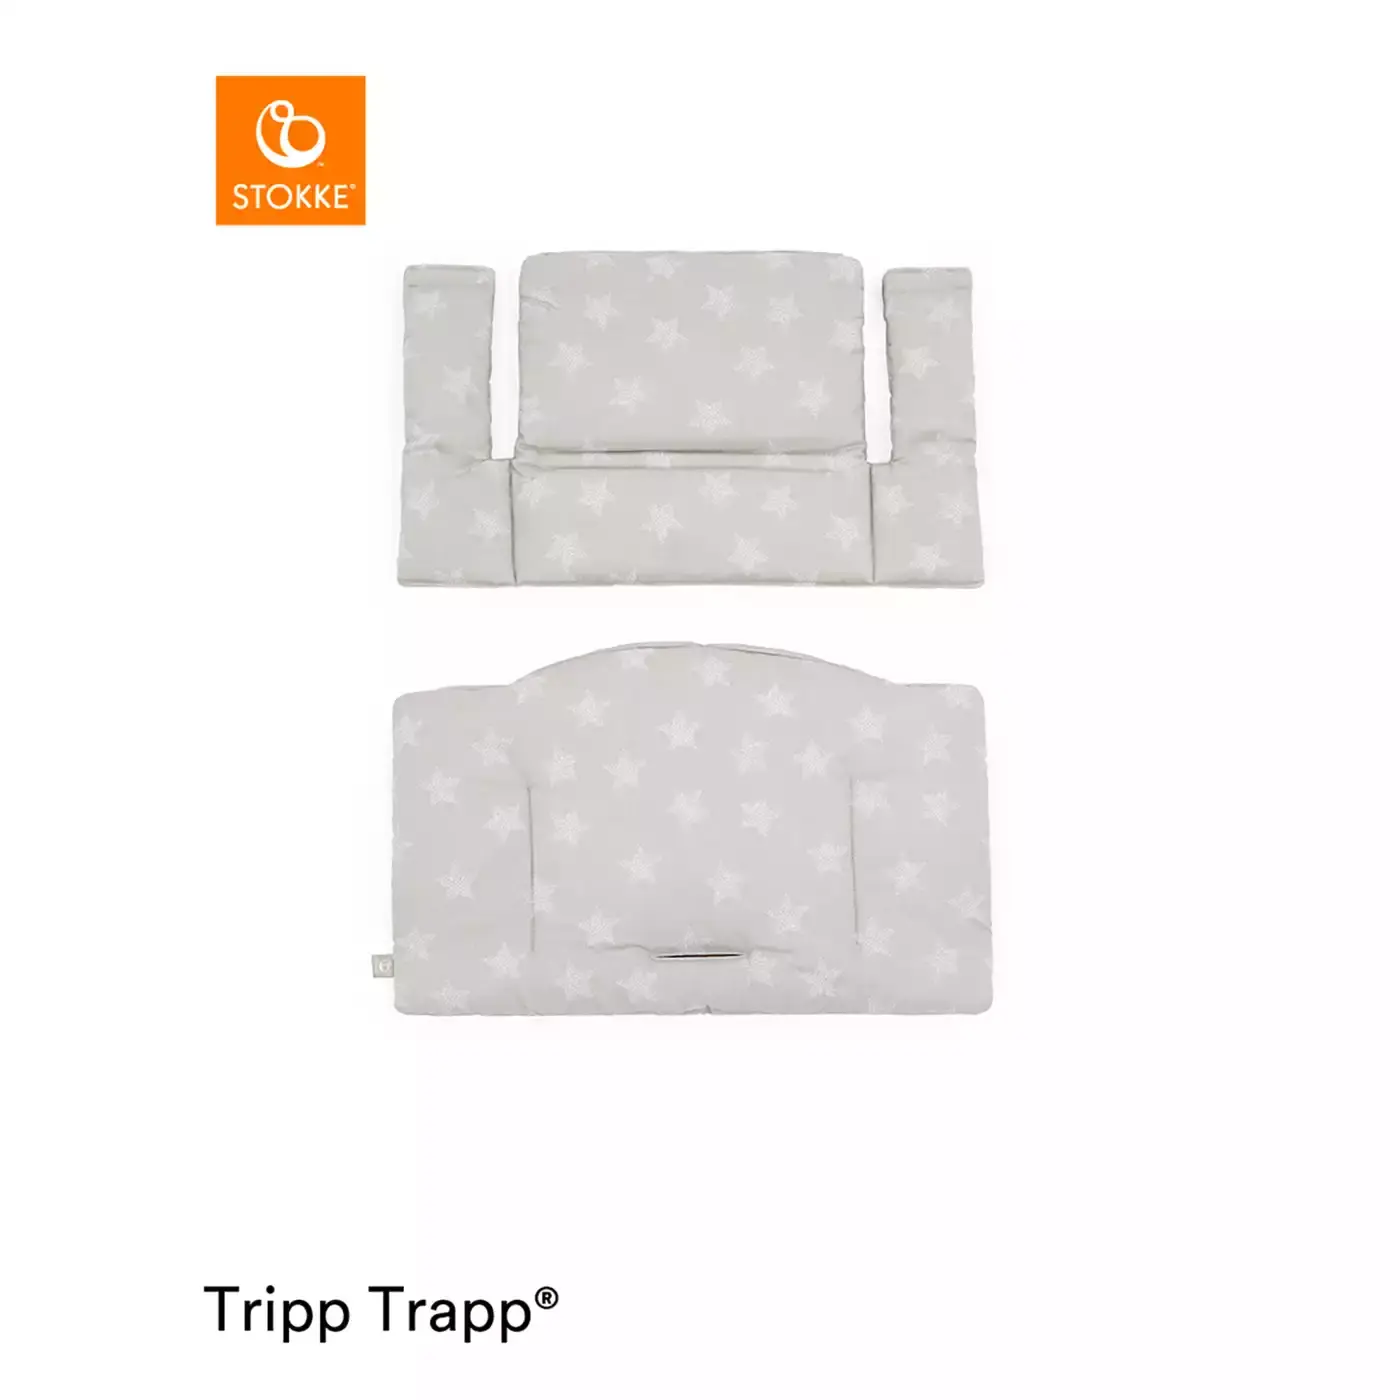 Tripp Trapp® Classic Kissen Star Silver STOKKE 2000580172201 1